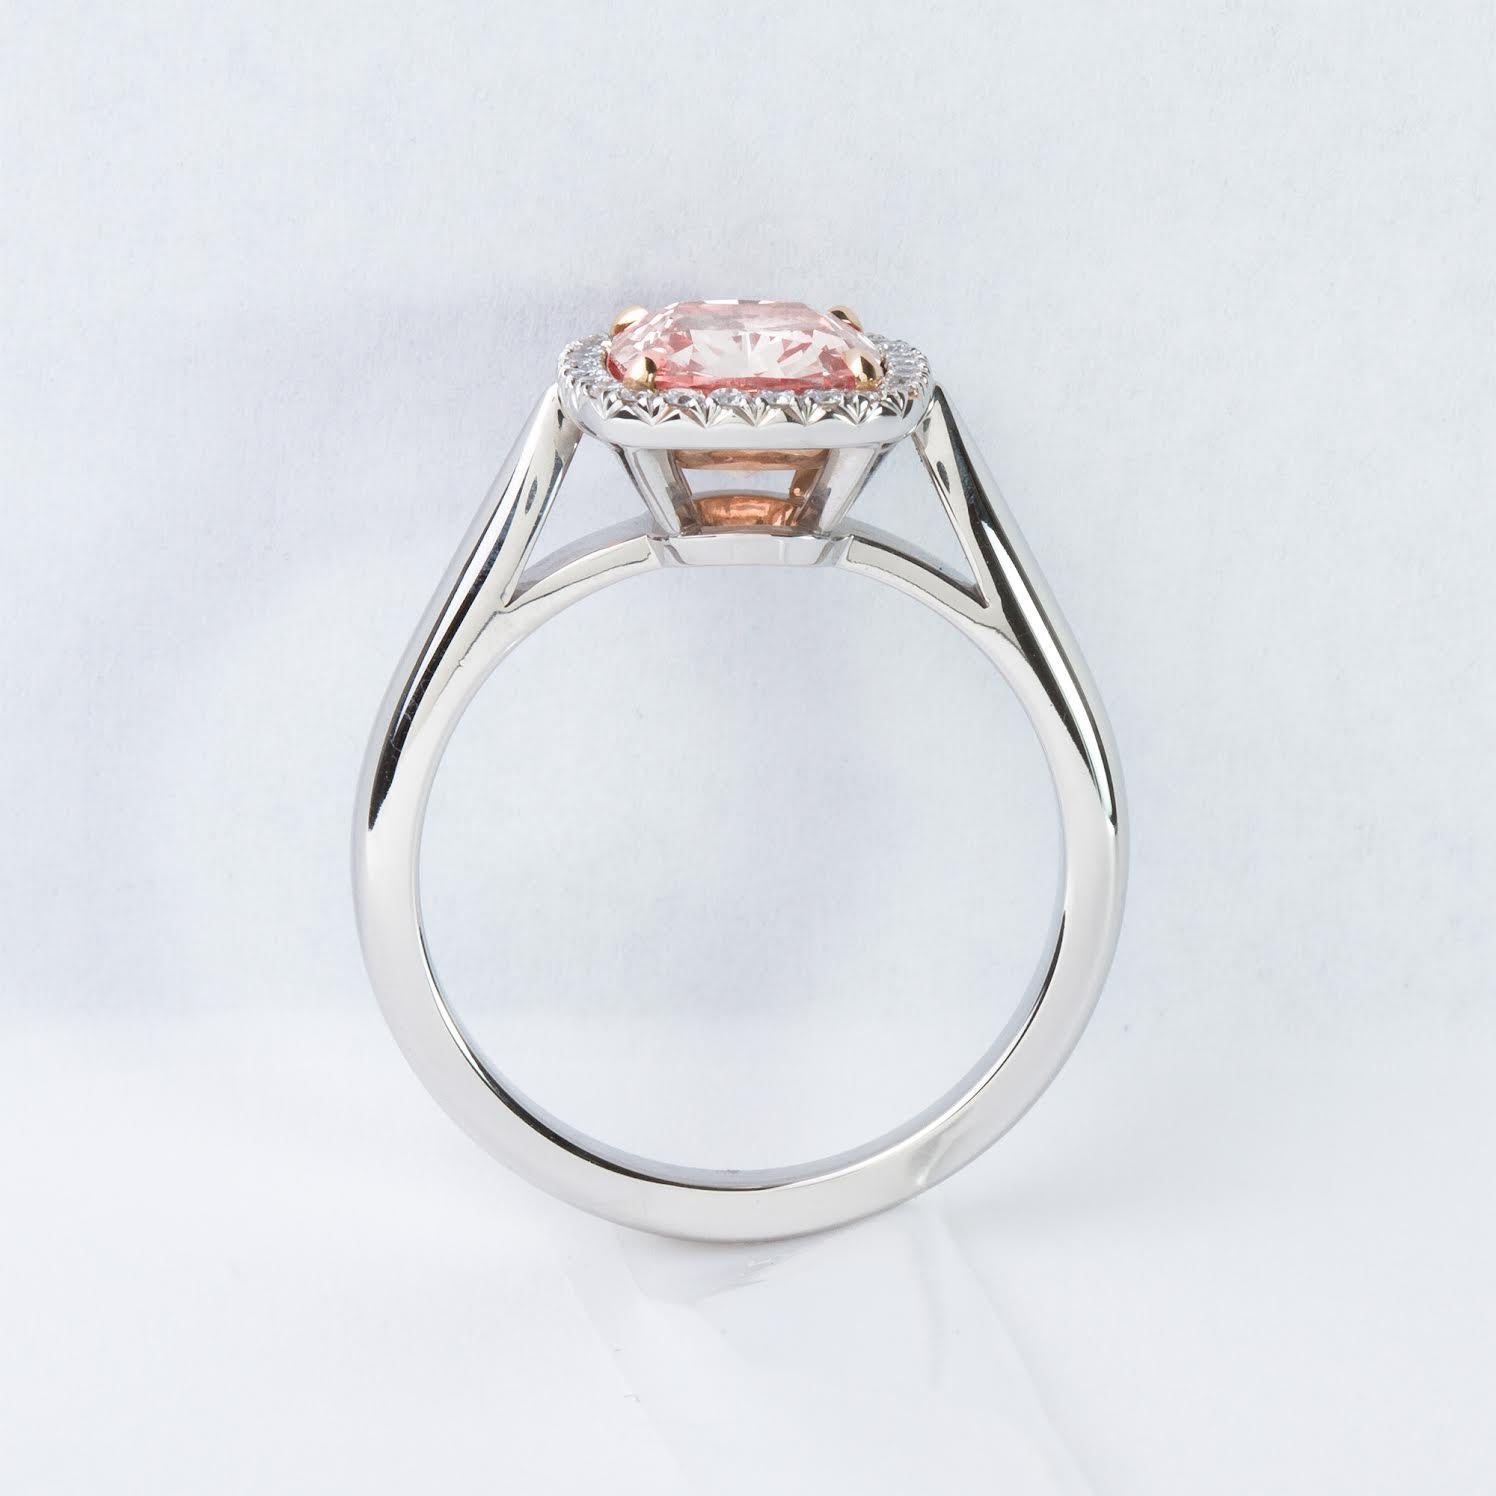 Cushion Cut Issac Nussbaum 2.02 Carat Pink Diamond Engagement Ring For Sale